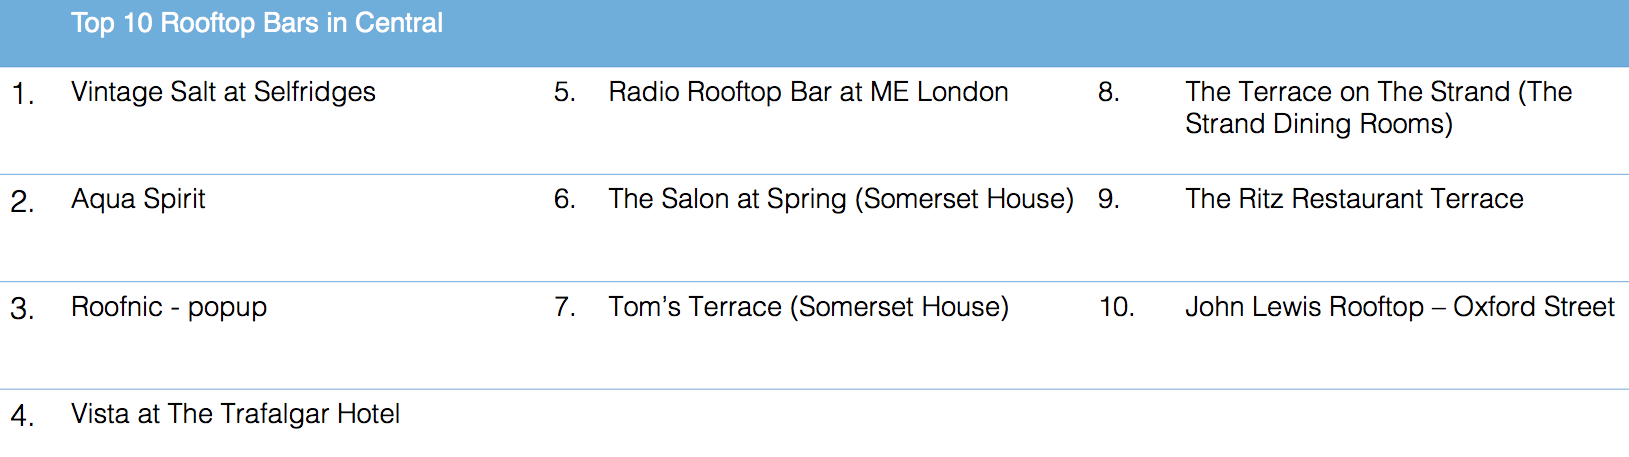 Top 10 Rooftop bars in London